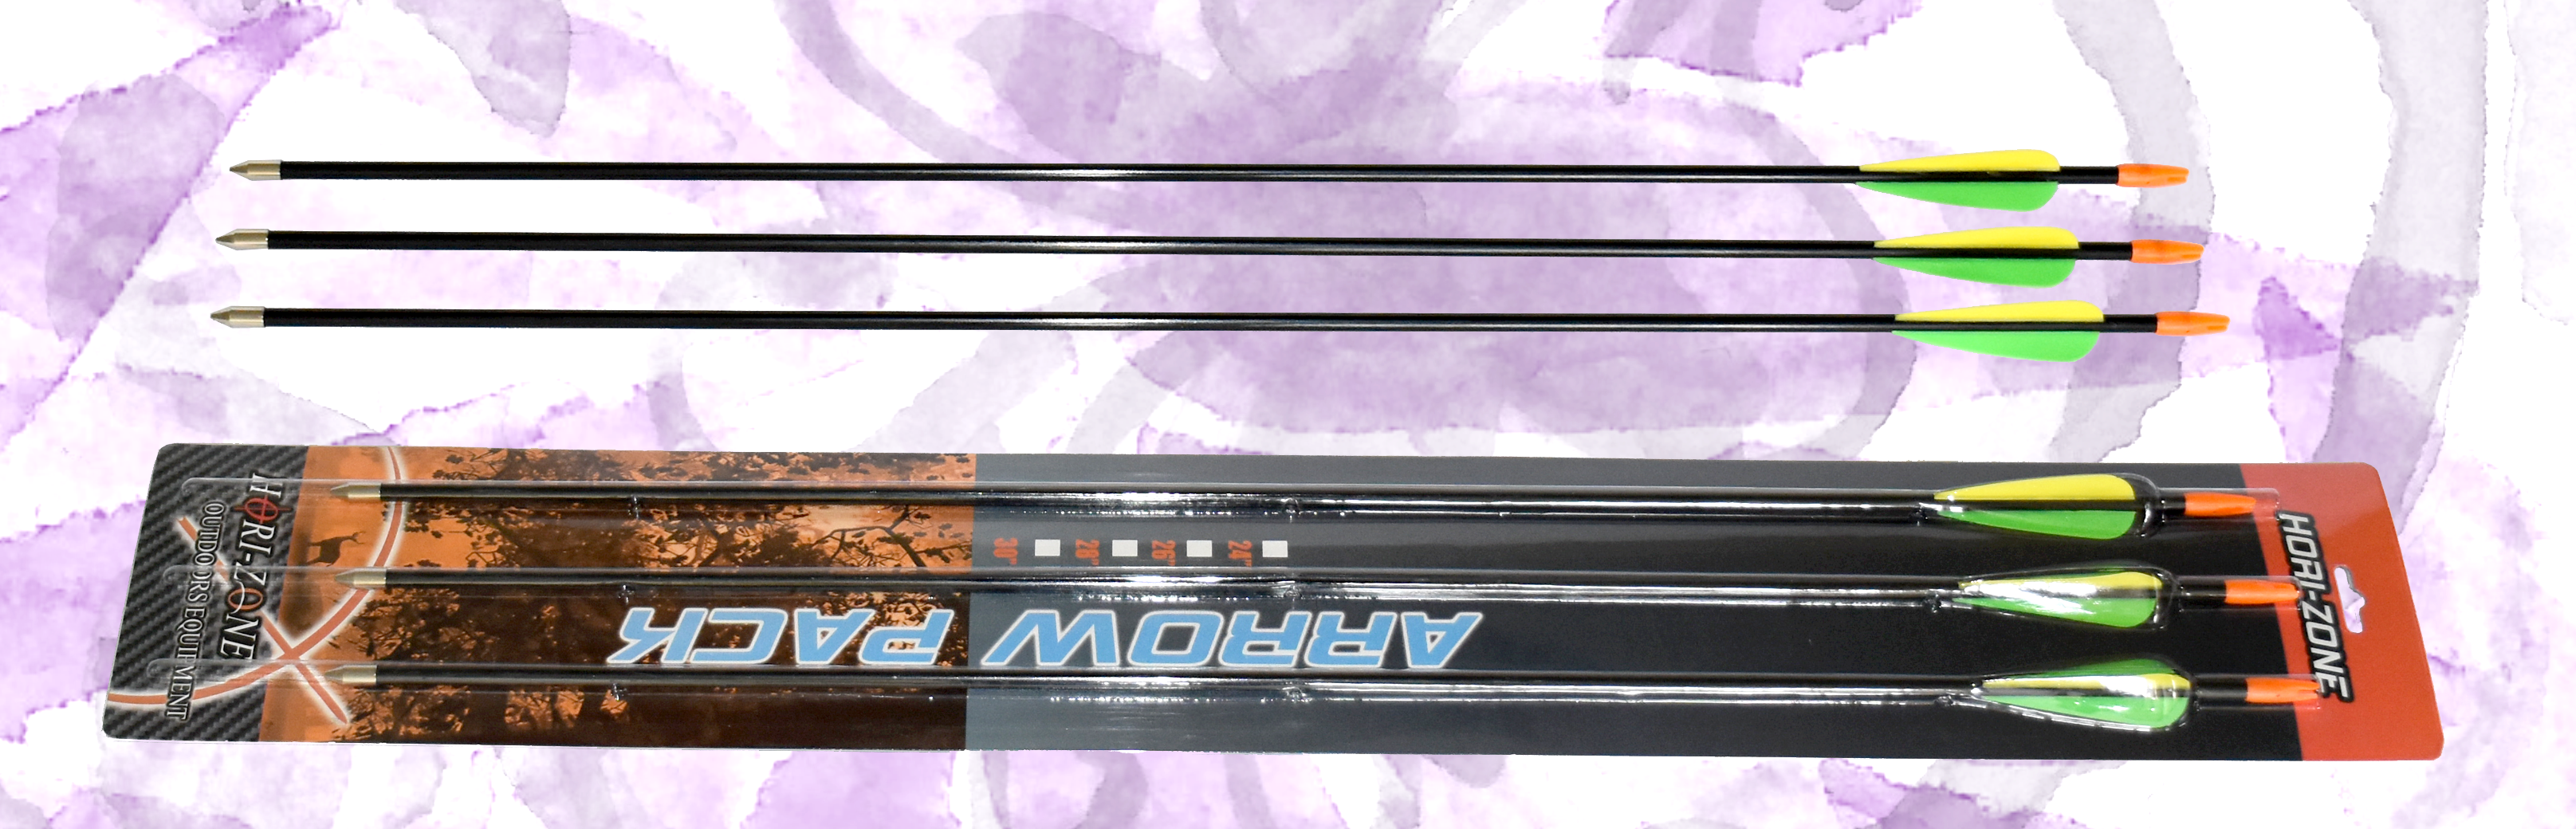 /archive/product/item/images/ArcheryFiberglassArrow/Archery Fiberglass Arrow-2.png